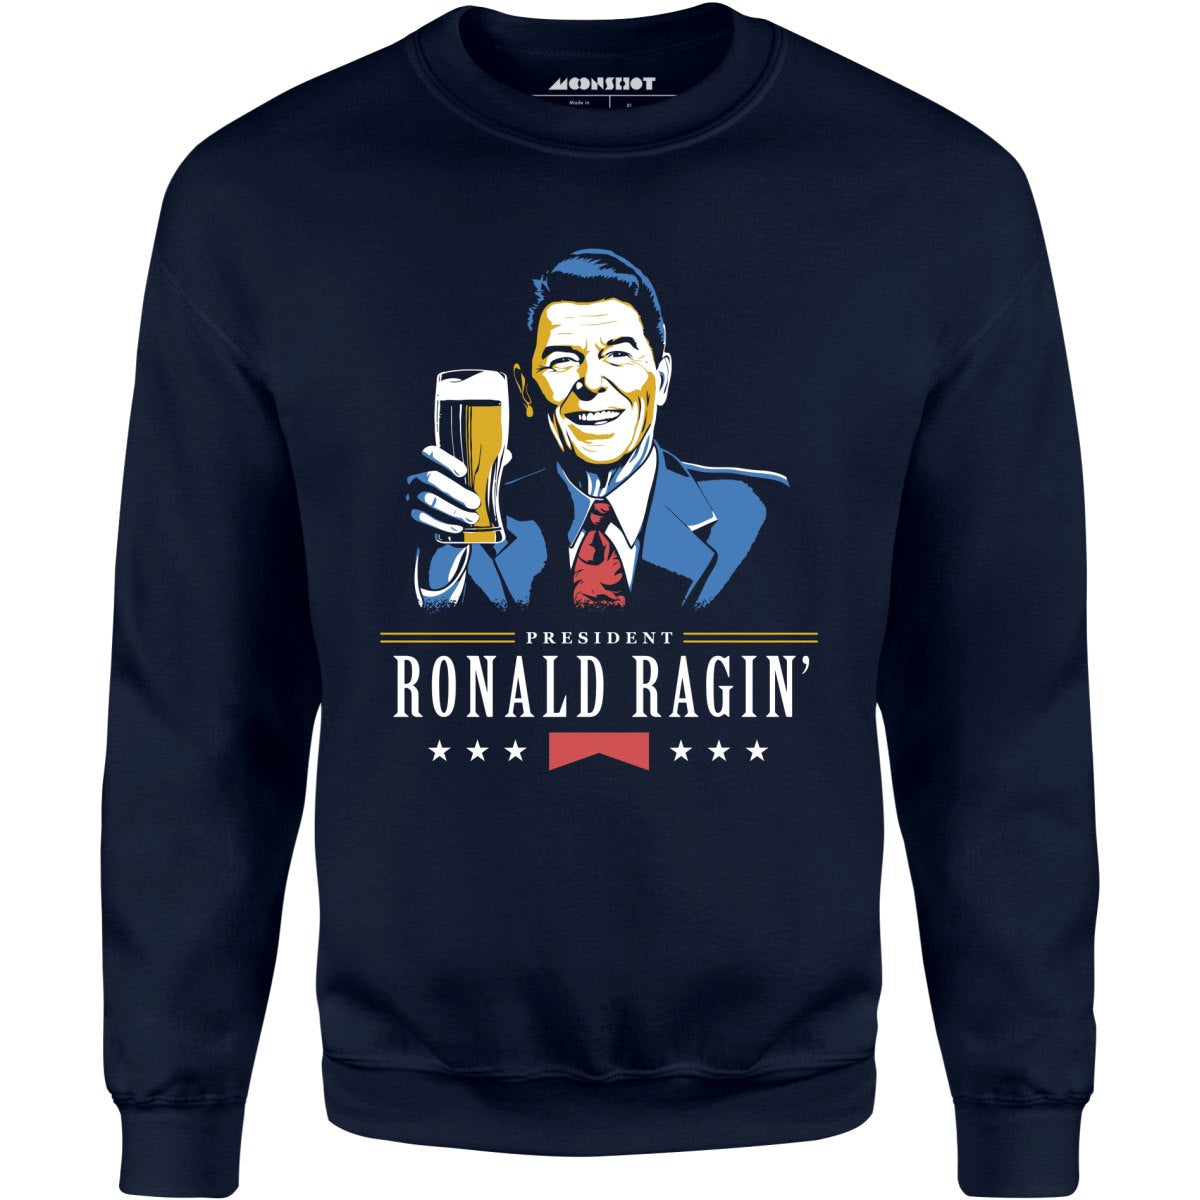 President Ronald Ragin' - Unisex Sweatshirt